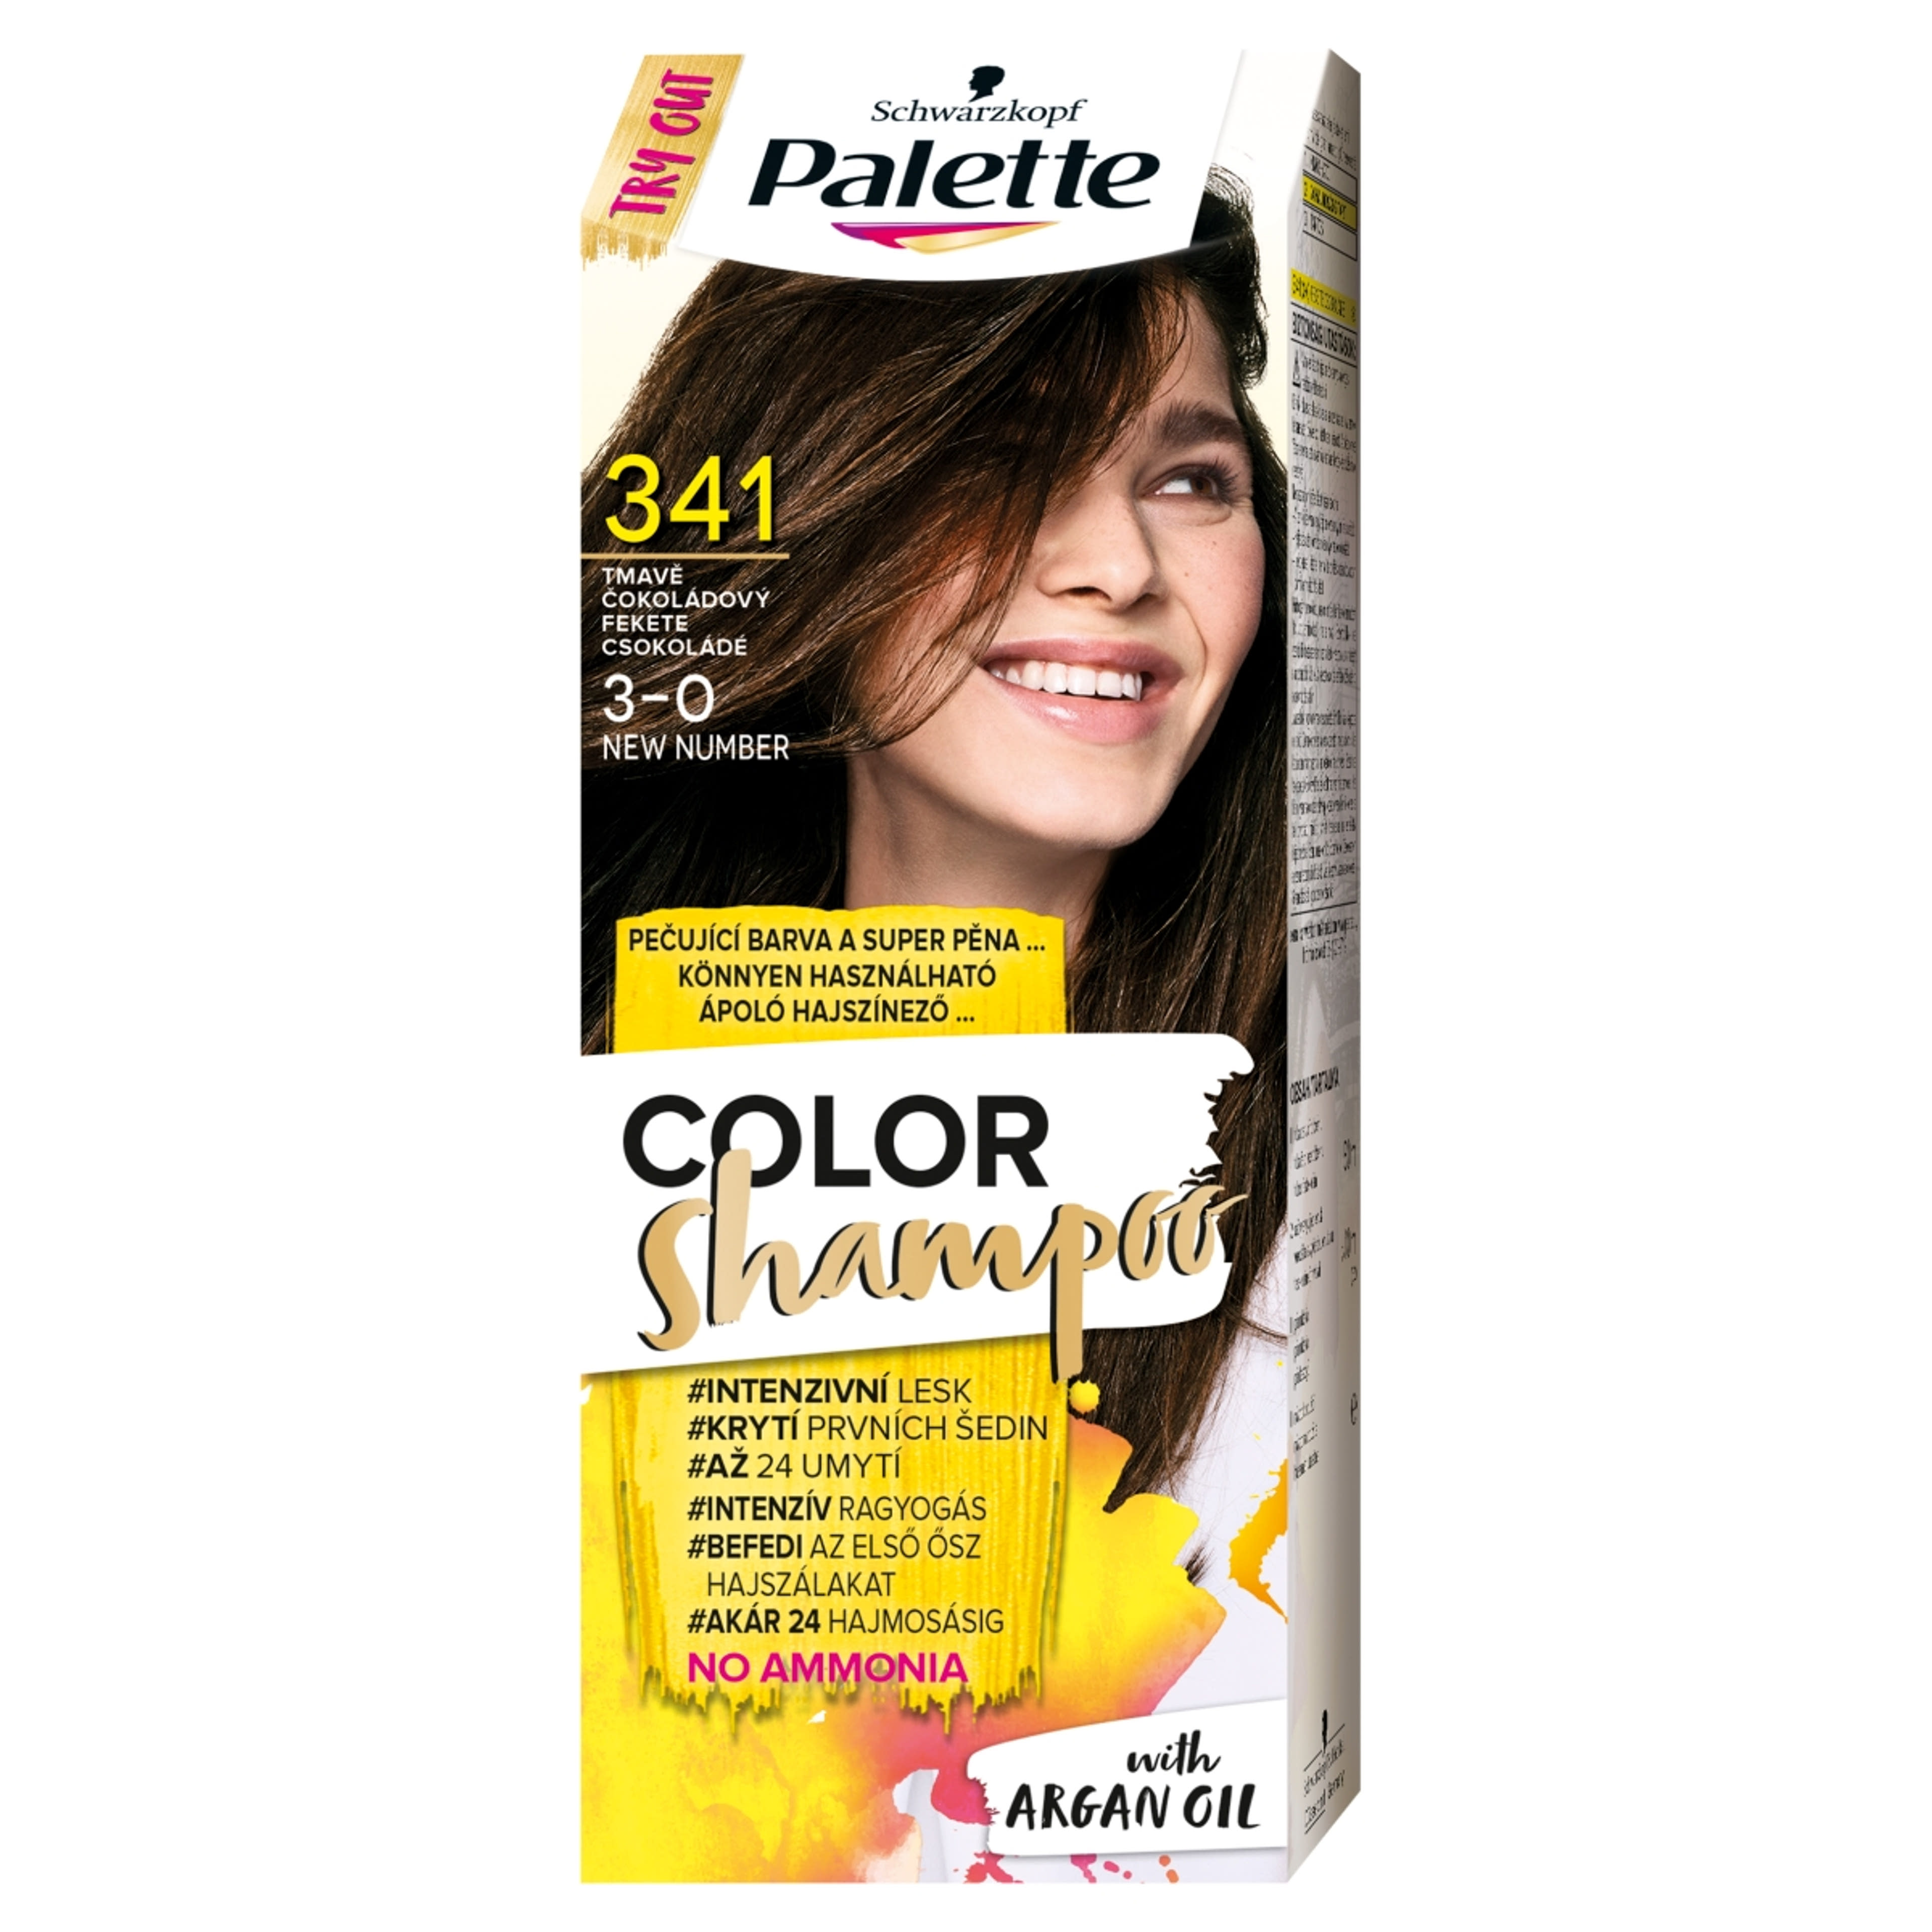 Schwarzkopf Palette Color Shampoo hajfesték 341 fekete csokoládé - 1 db-1